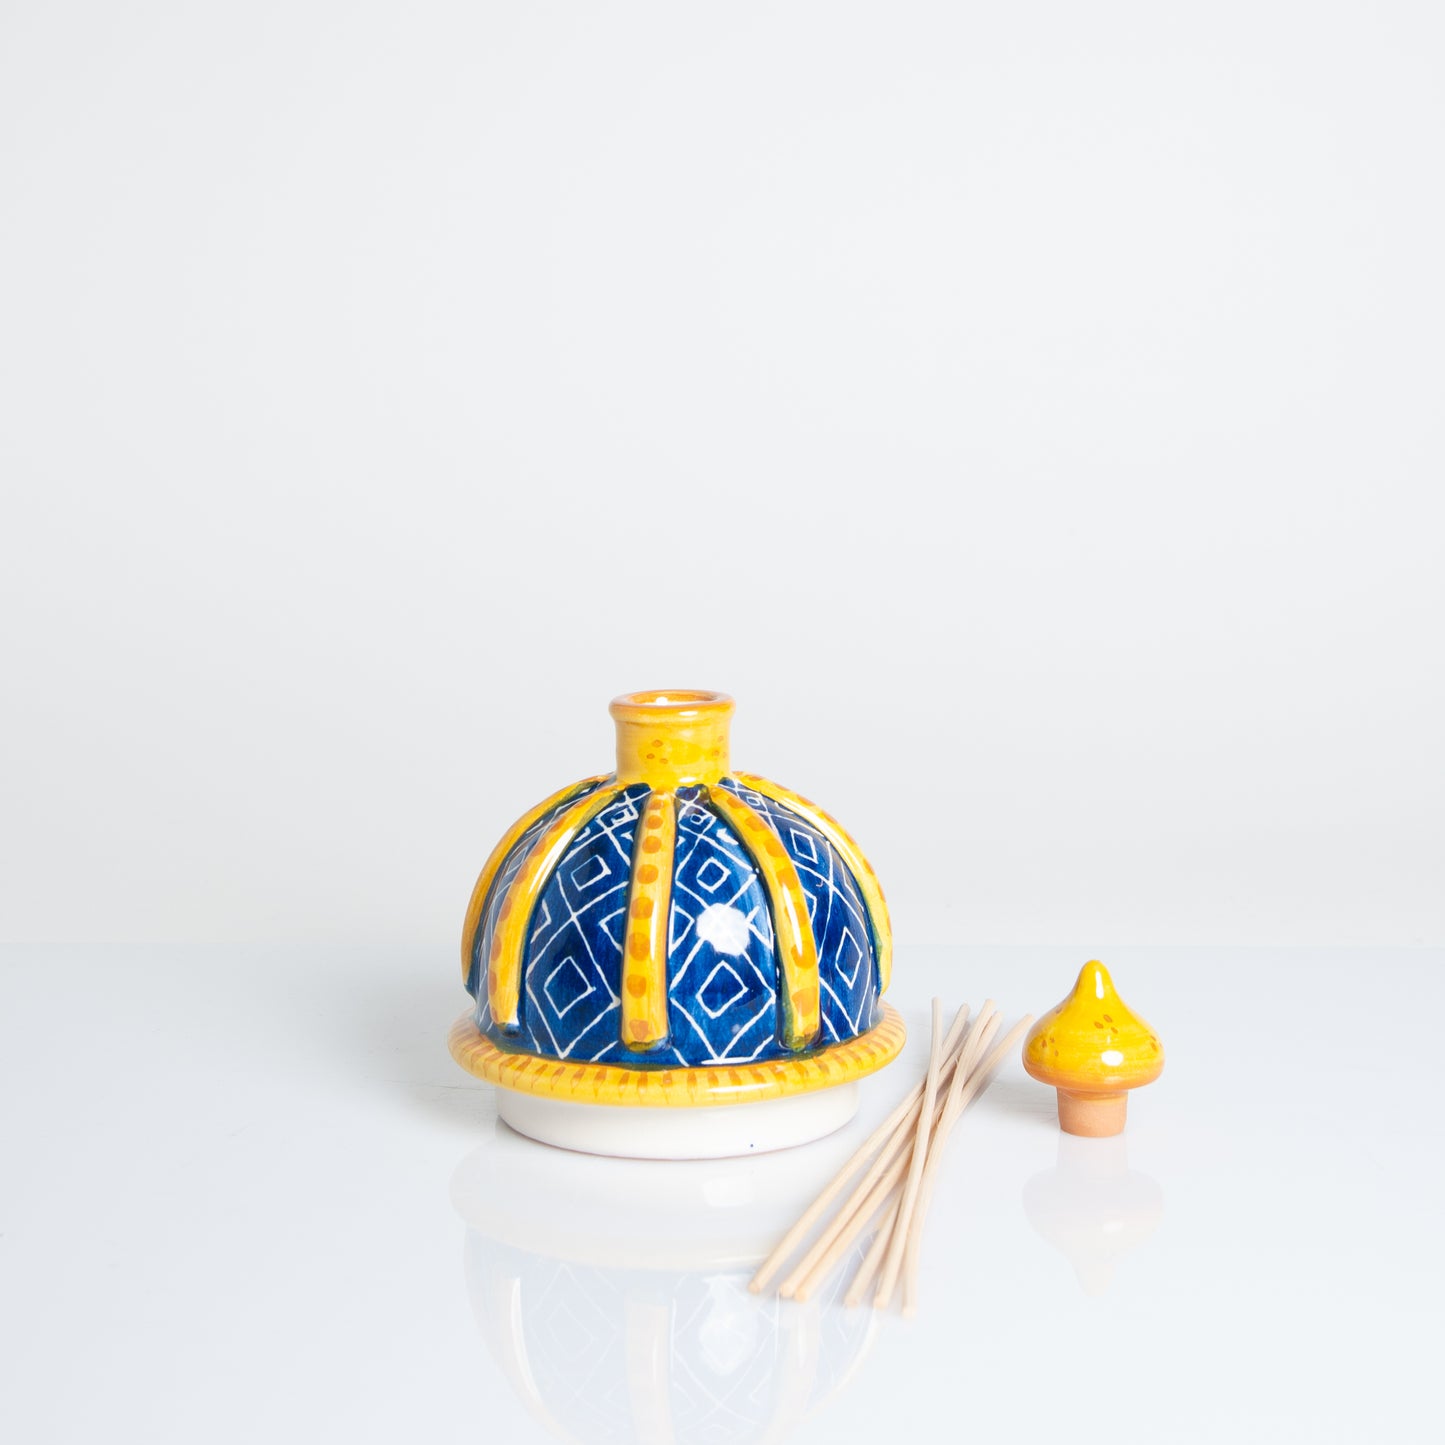 Blue/yellow perfumer dome